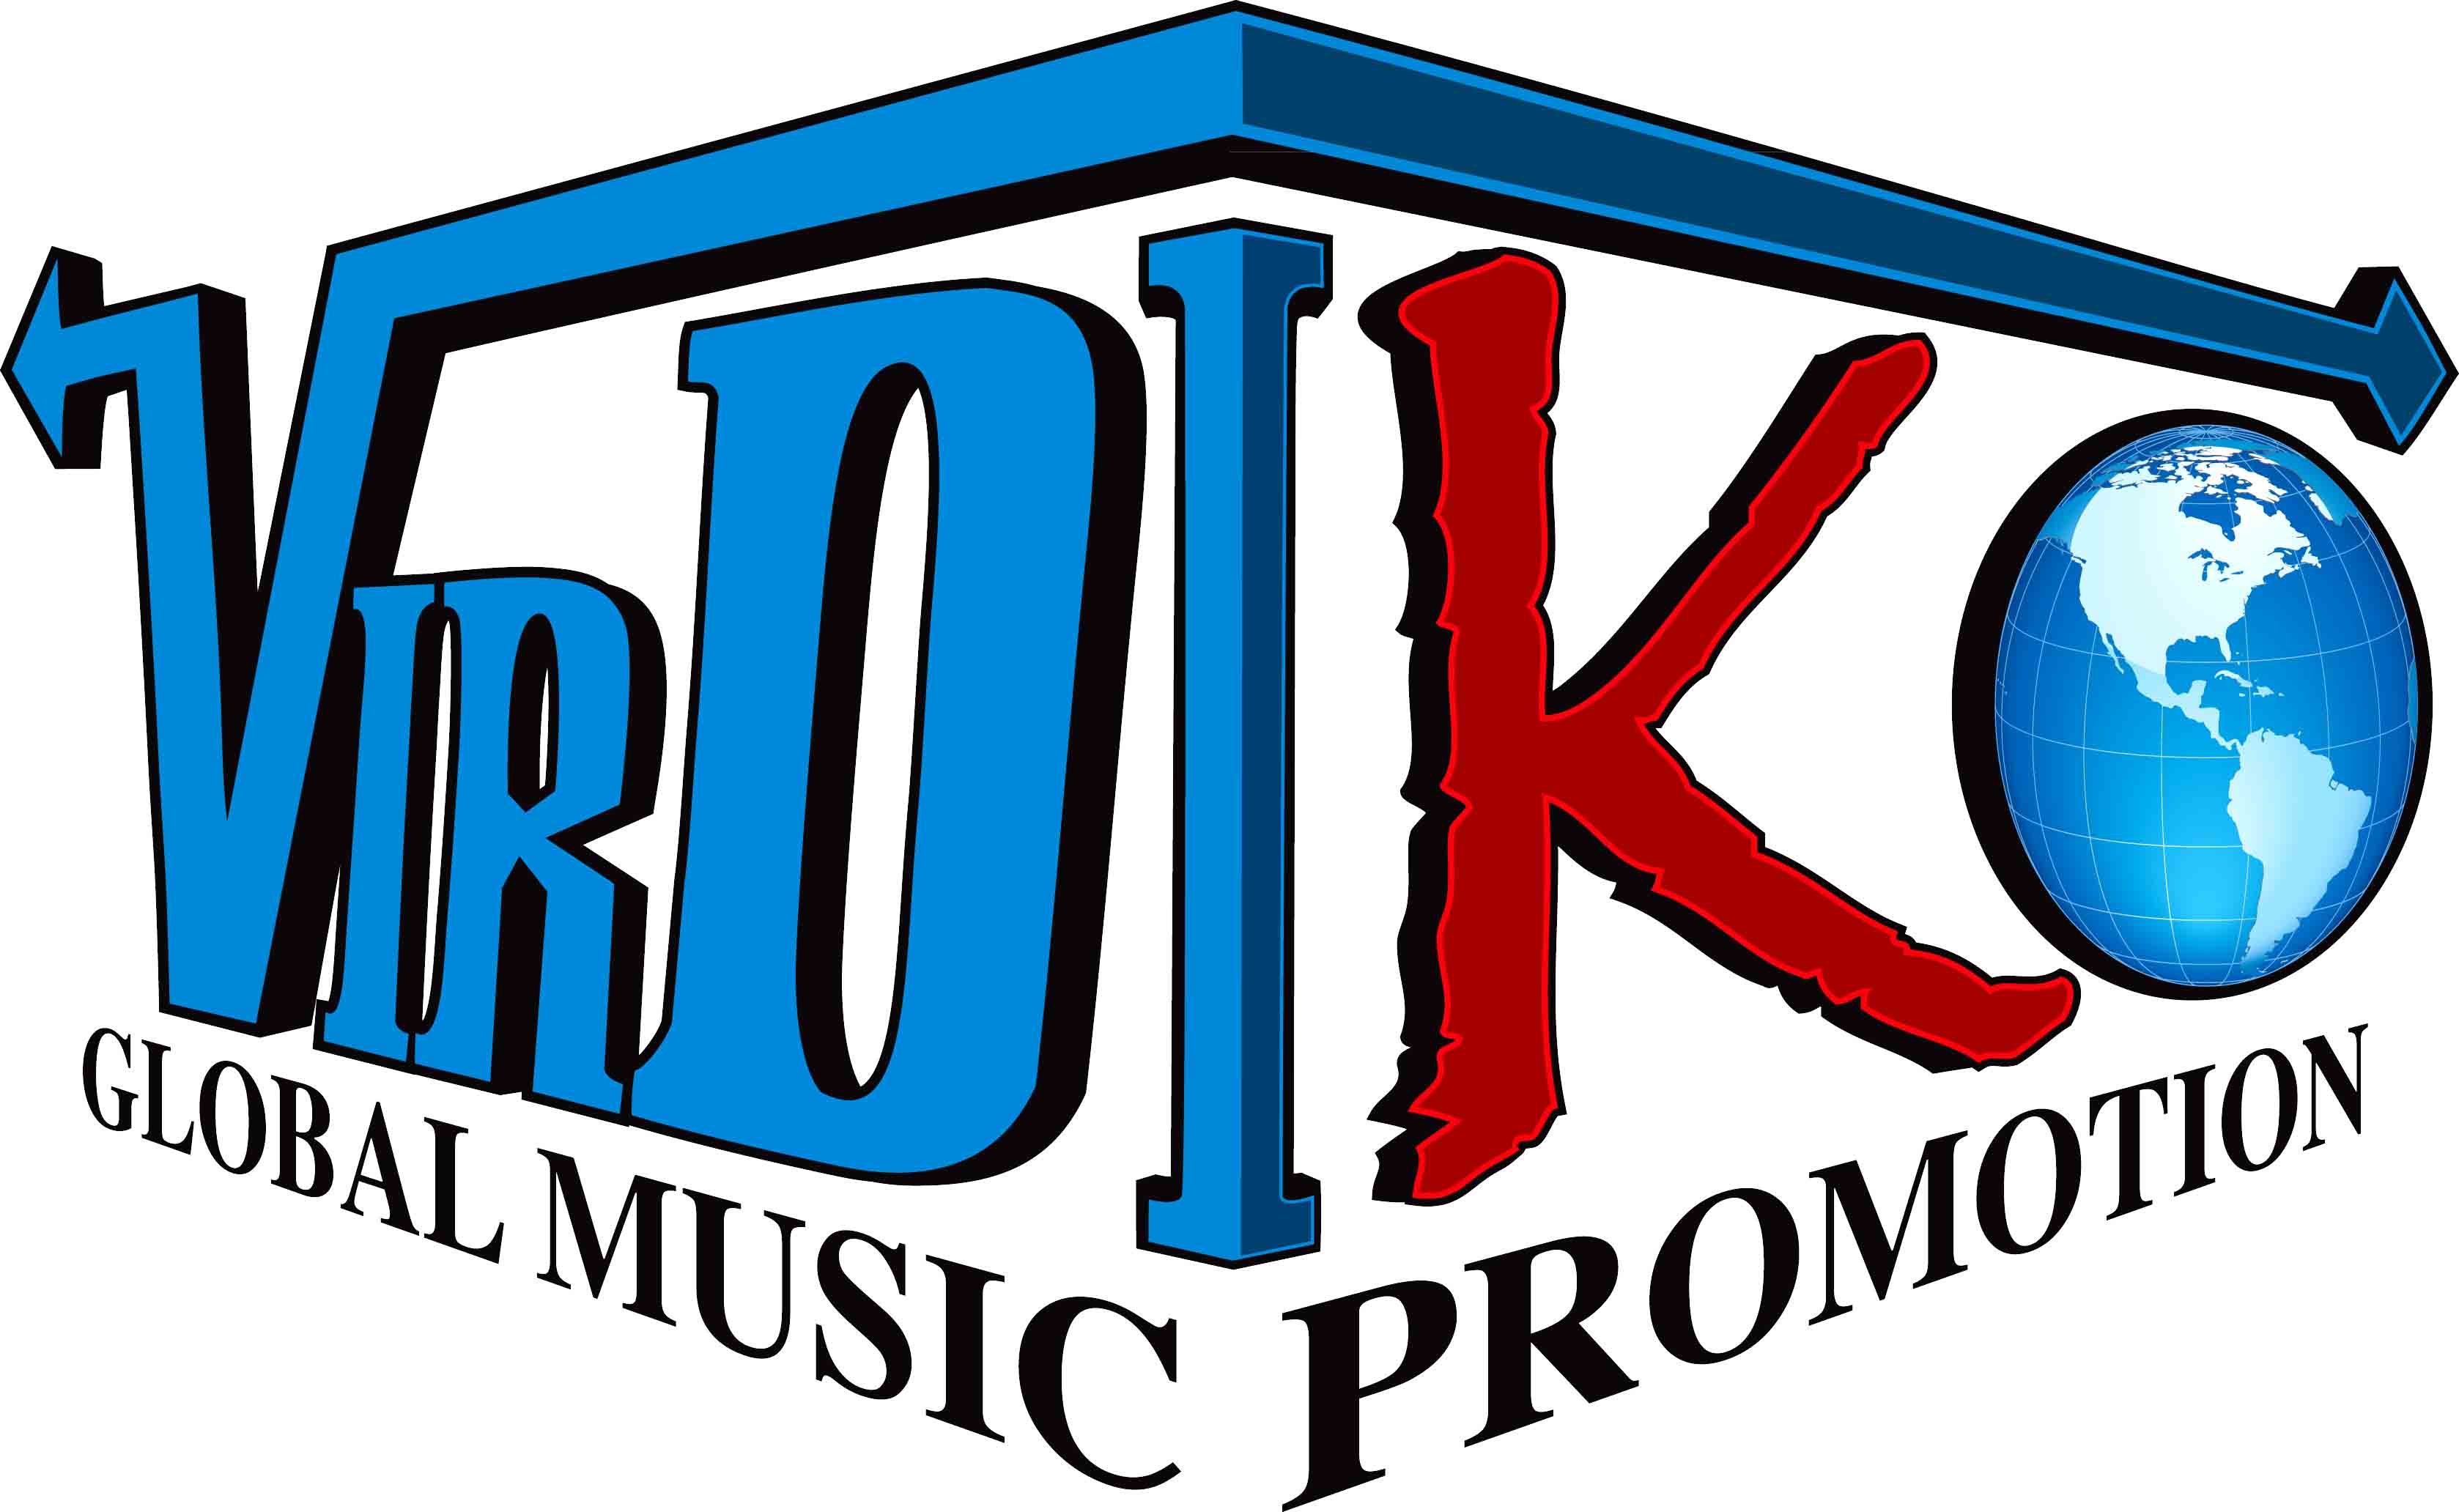 Virdiko Logo